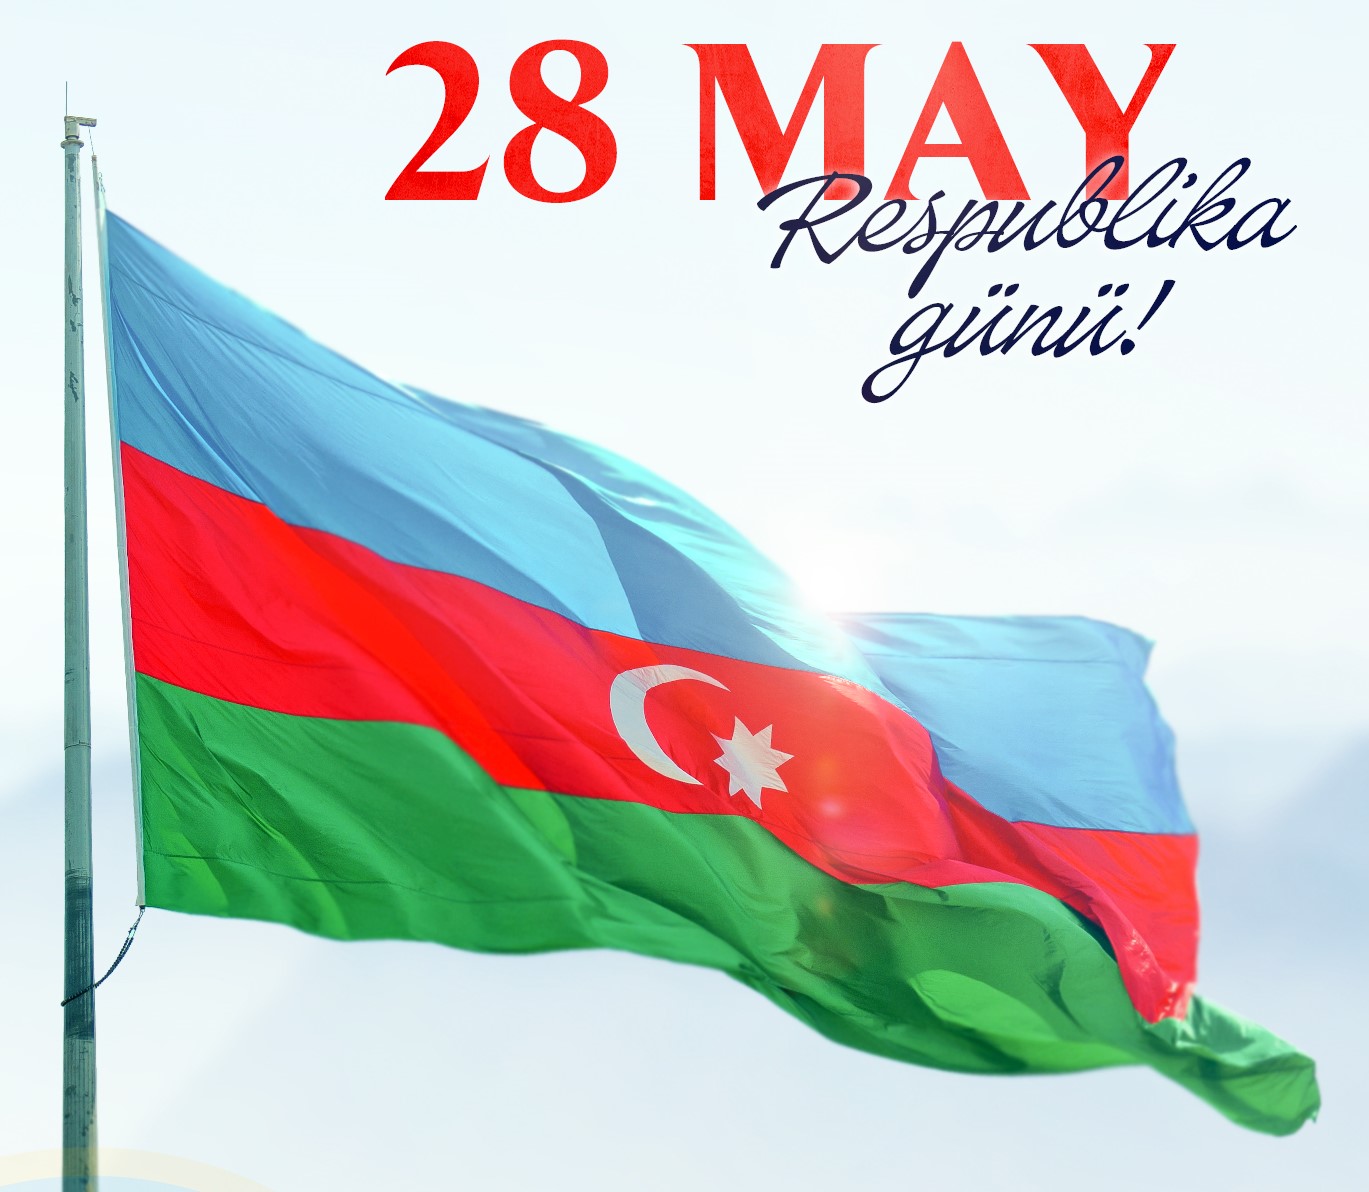 28 MAYIS AZERBAYCAN’IN MİLLİ BAĞIMSIZLIK İLANI KUTLU OLSUN